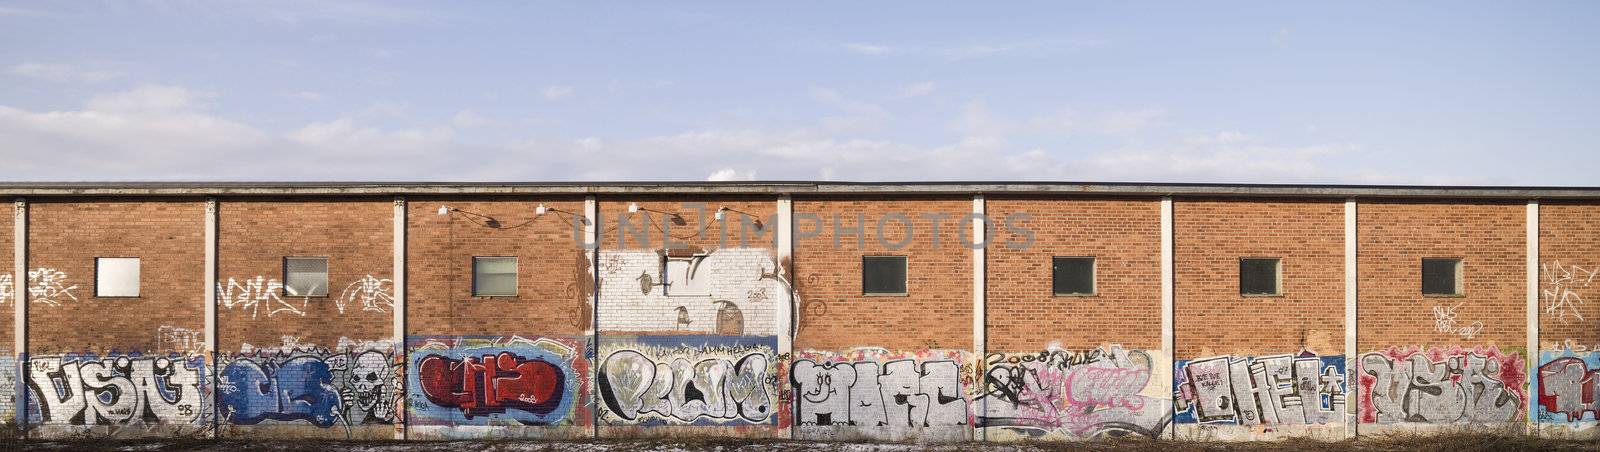 Brickwall with graffiti on